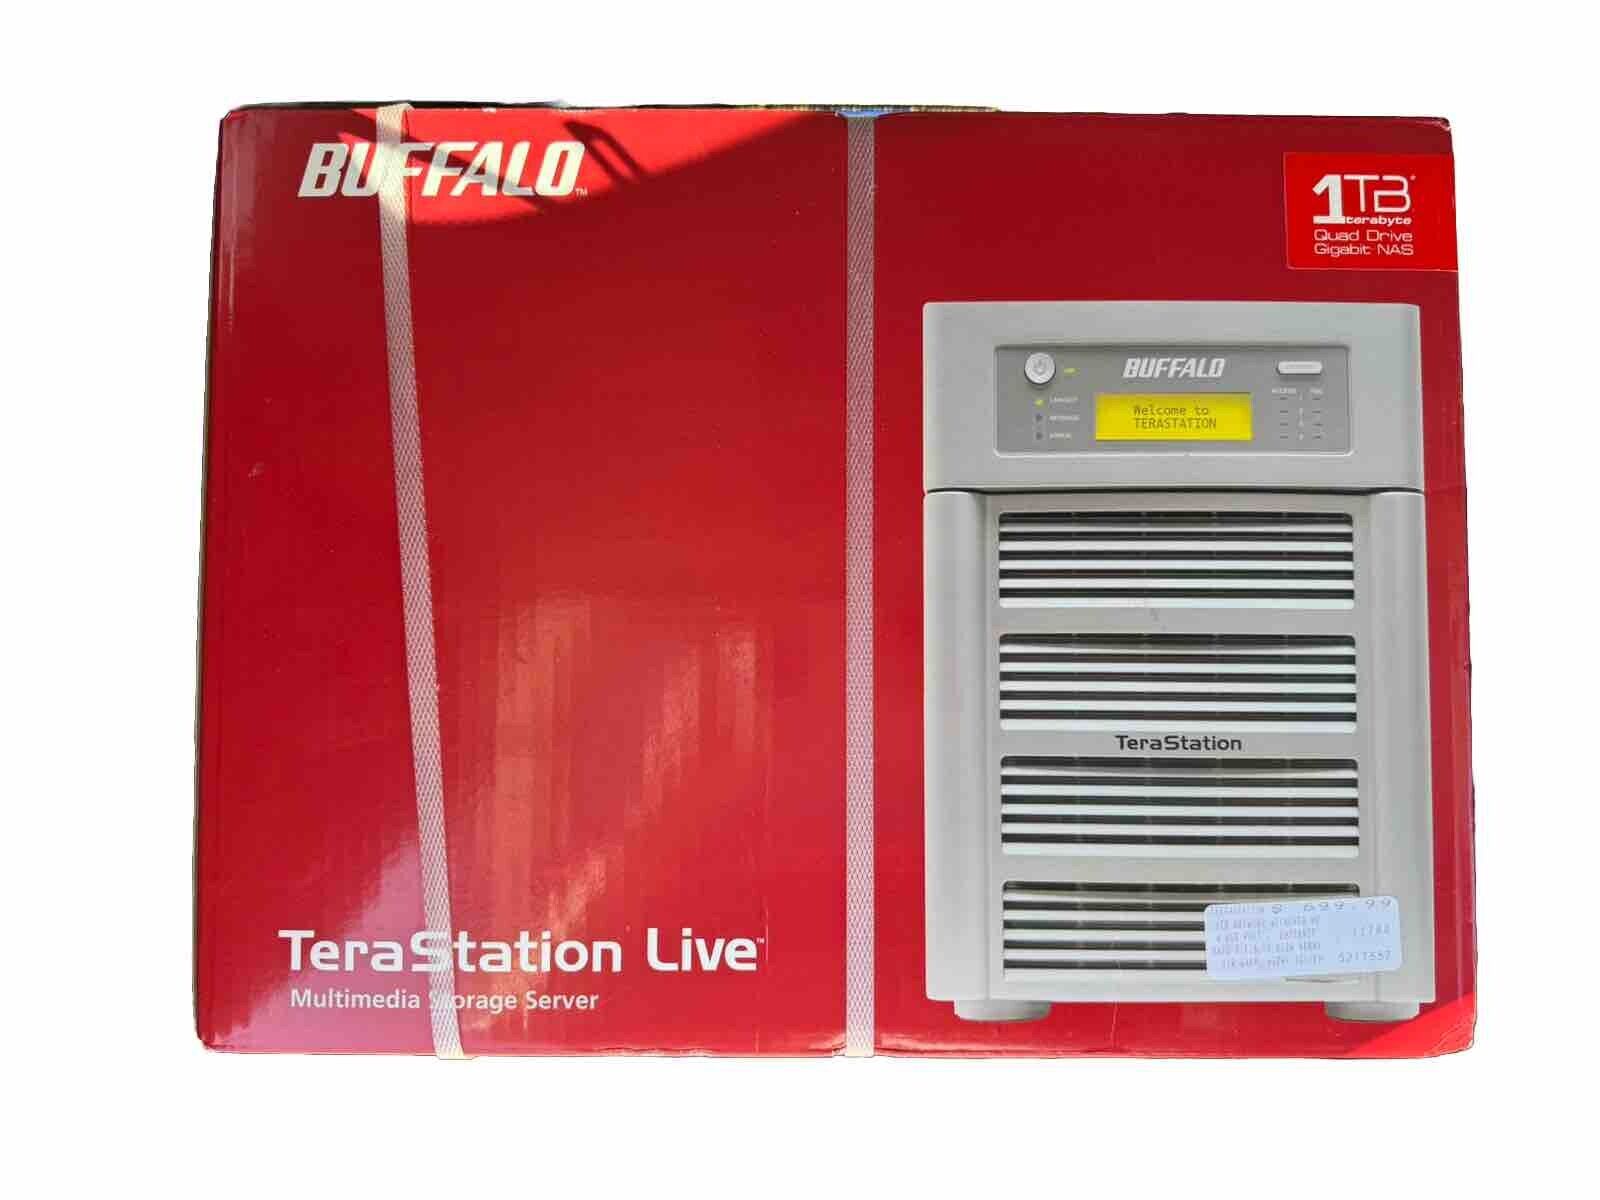 Buffalo Terastation Live Multimedia \ Storage 1TB Quad Drive Gigabit NAS NEW